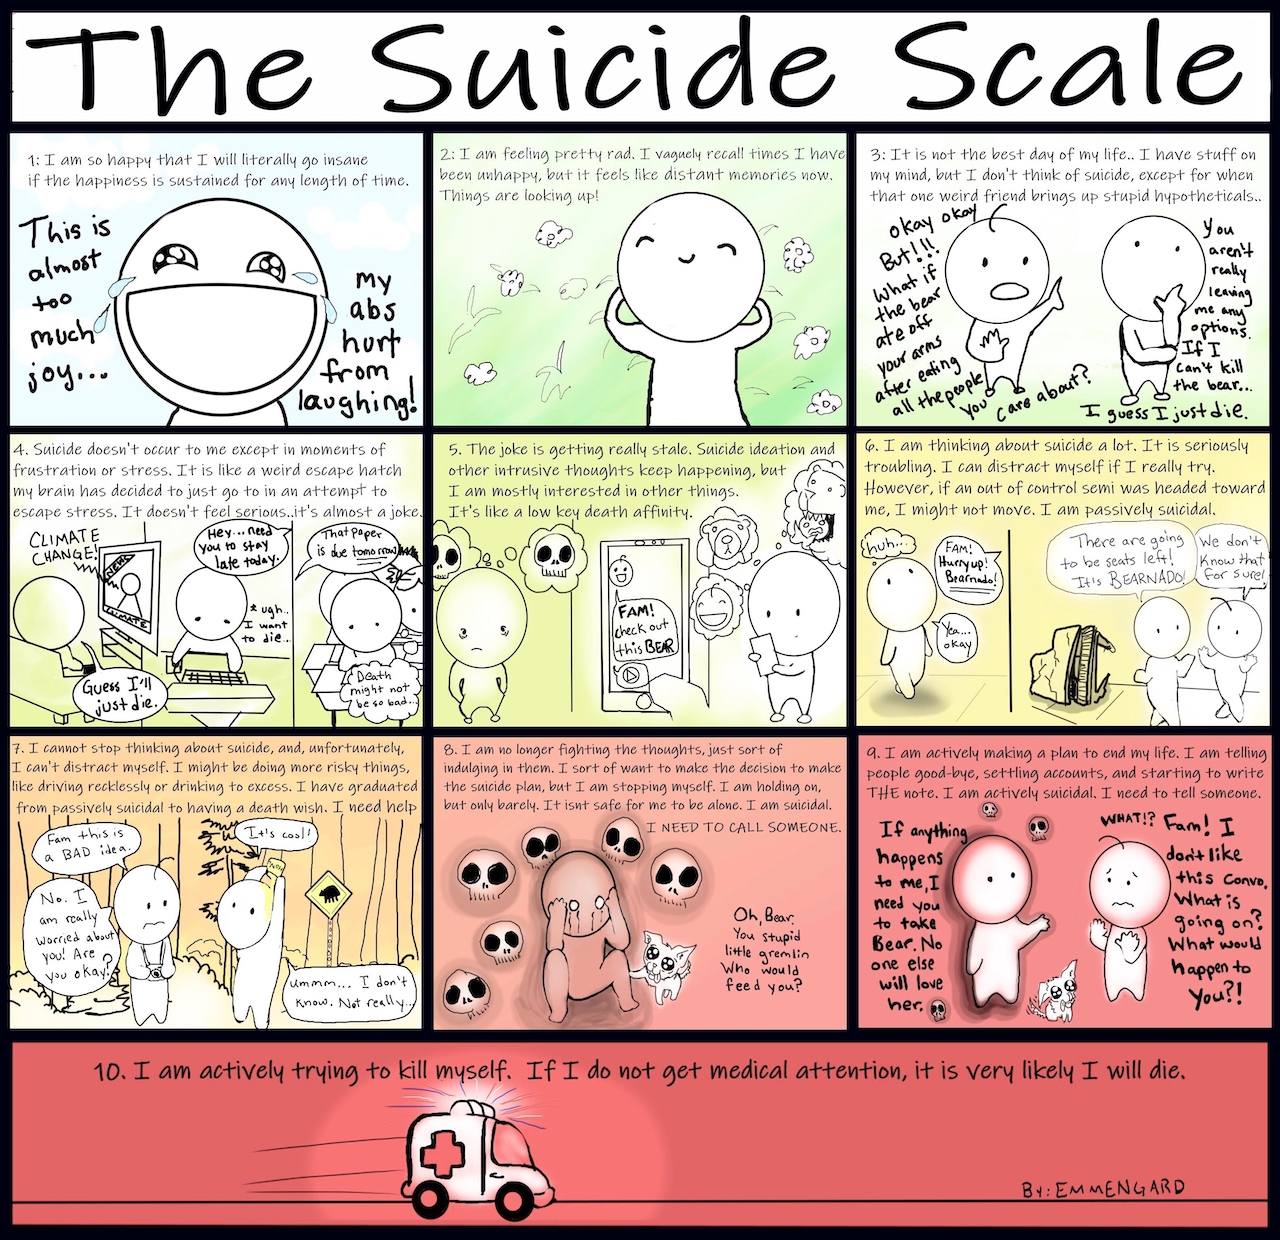 Emmengards_Suicide_Scale